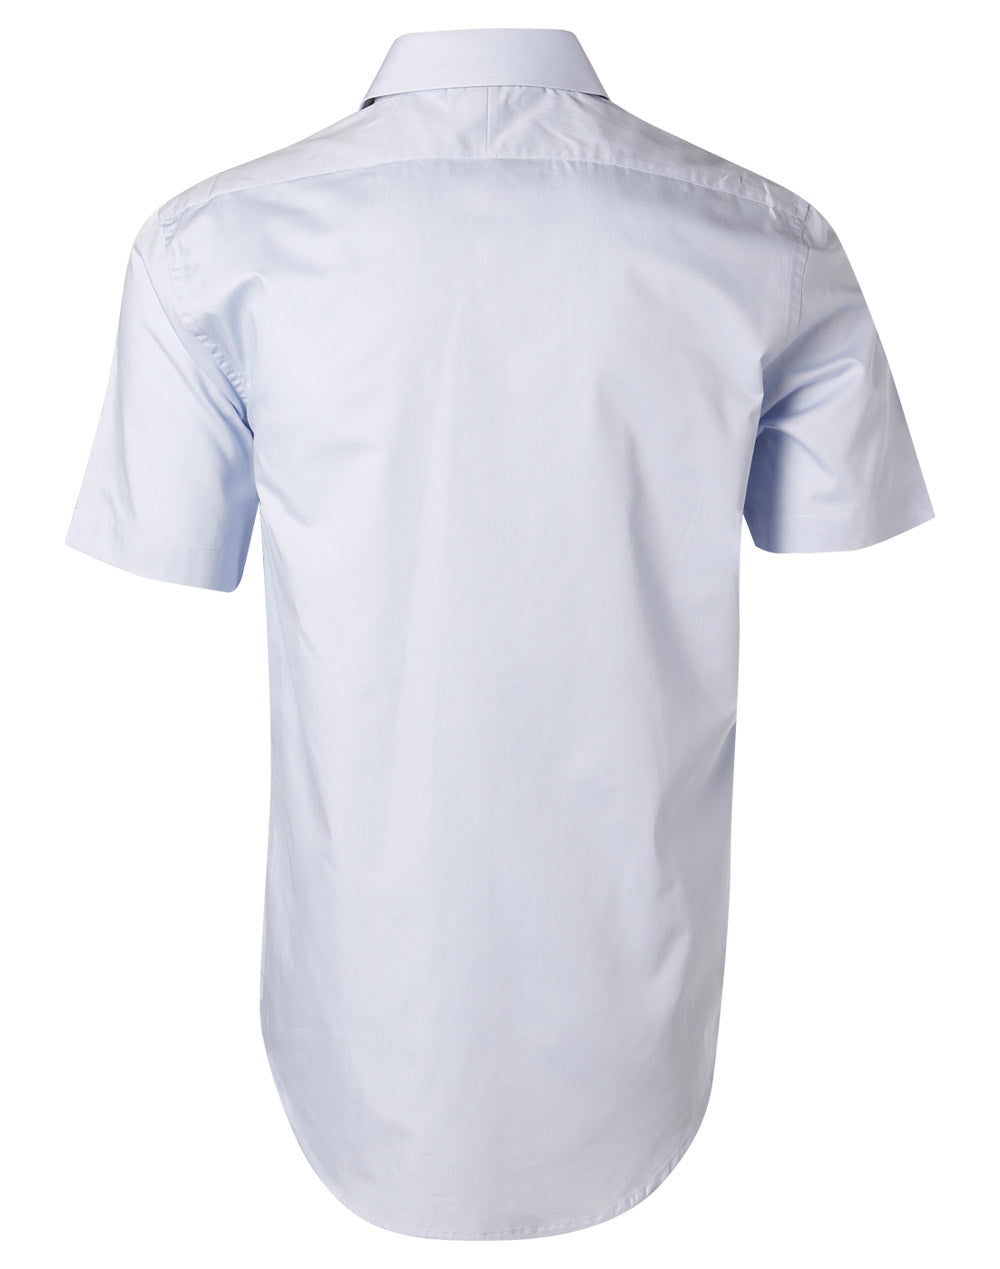 Benchmark M7030S Men's Fine Twill Short Sleeve Shirt